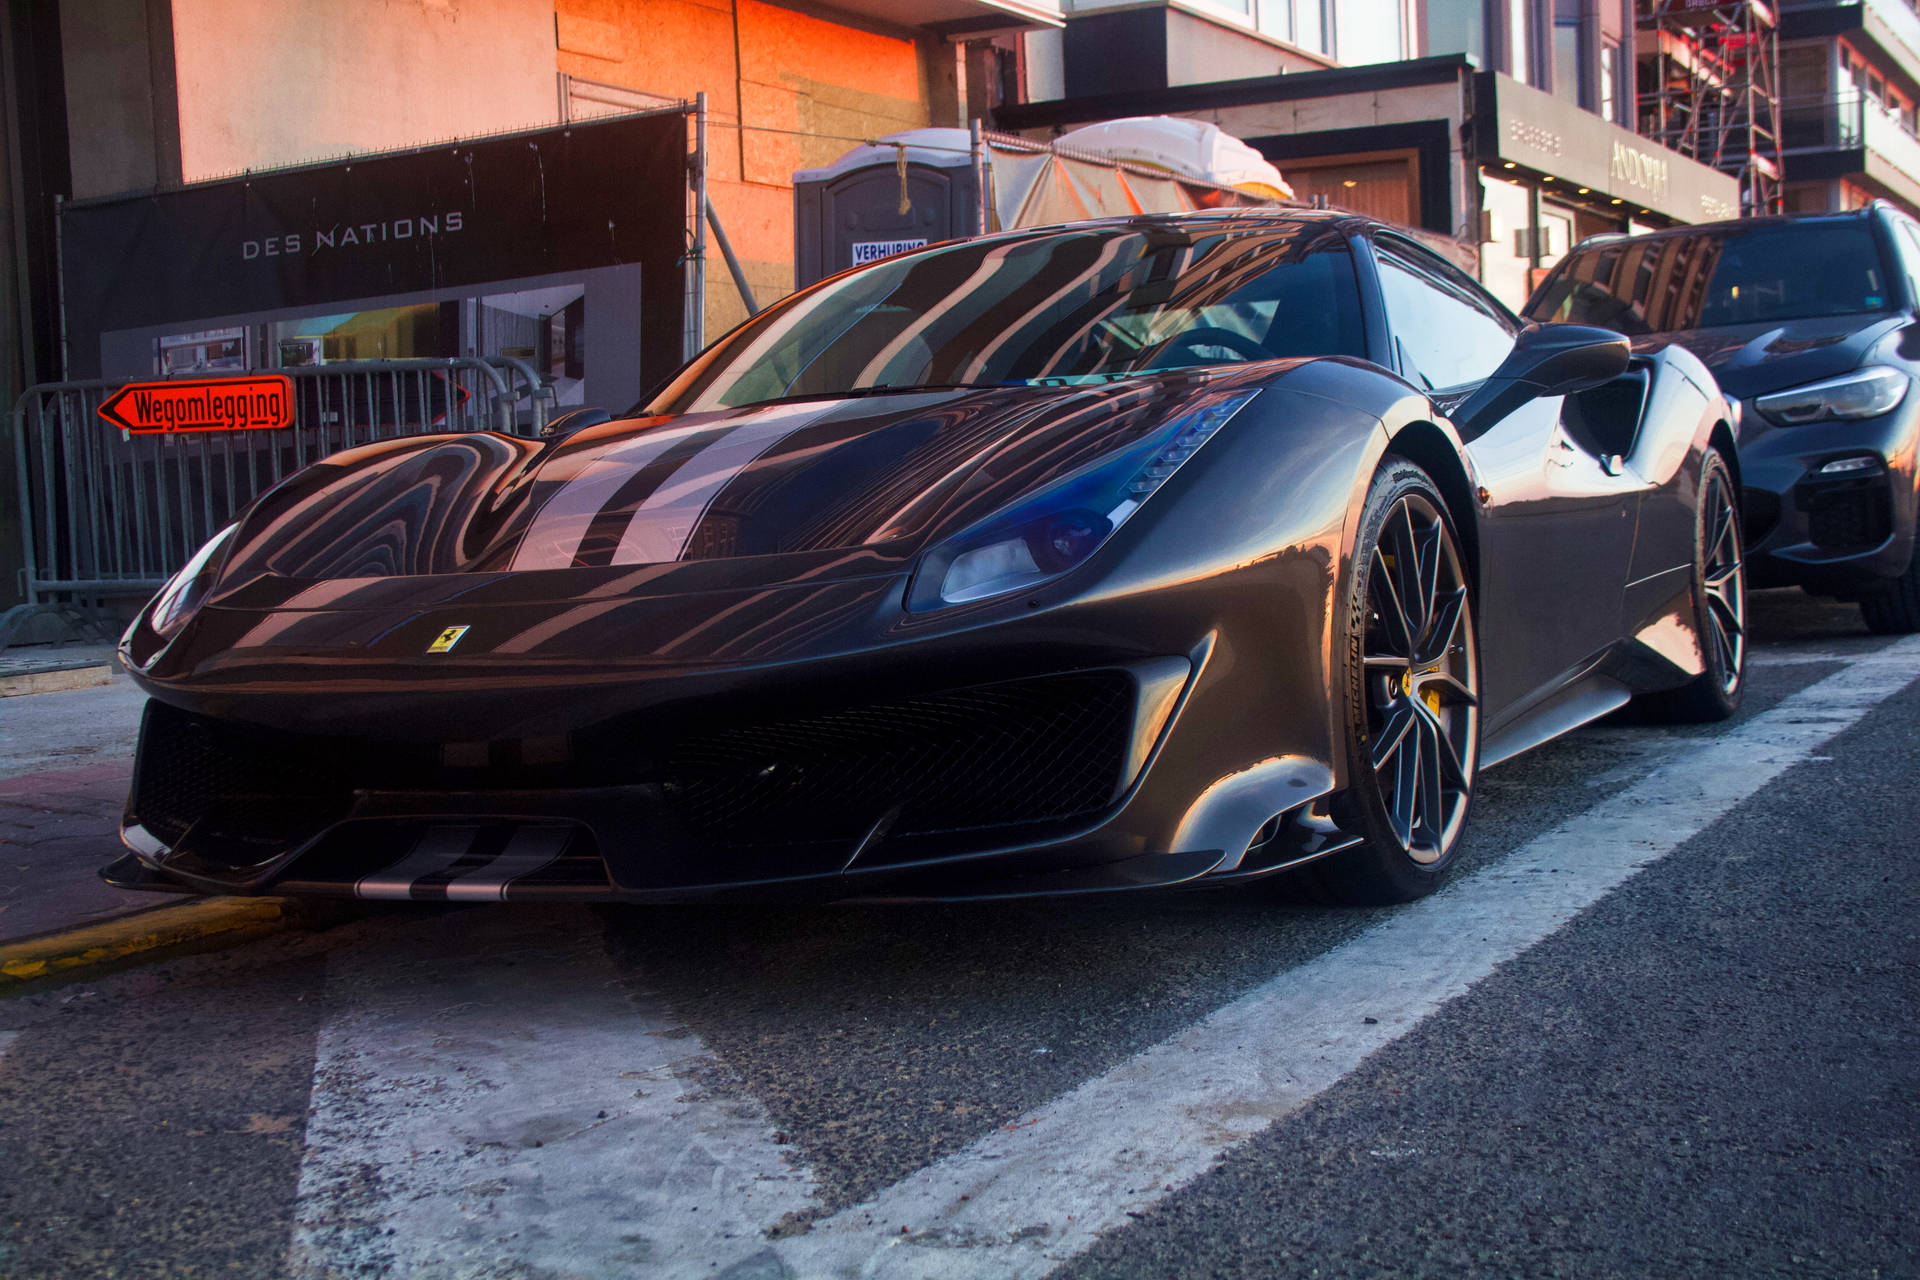 Enjoy the ride in this sleek black Ferrari on the city streets. Wallpaper